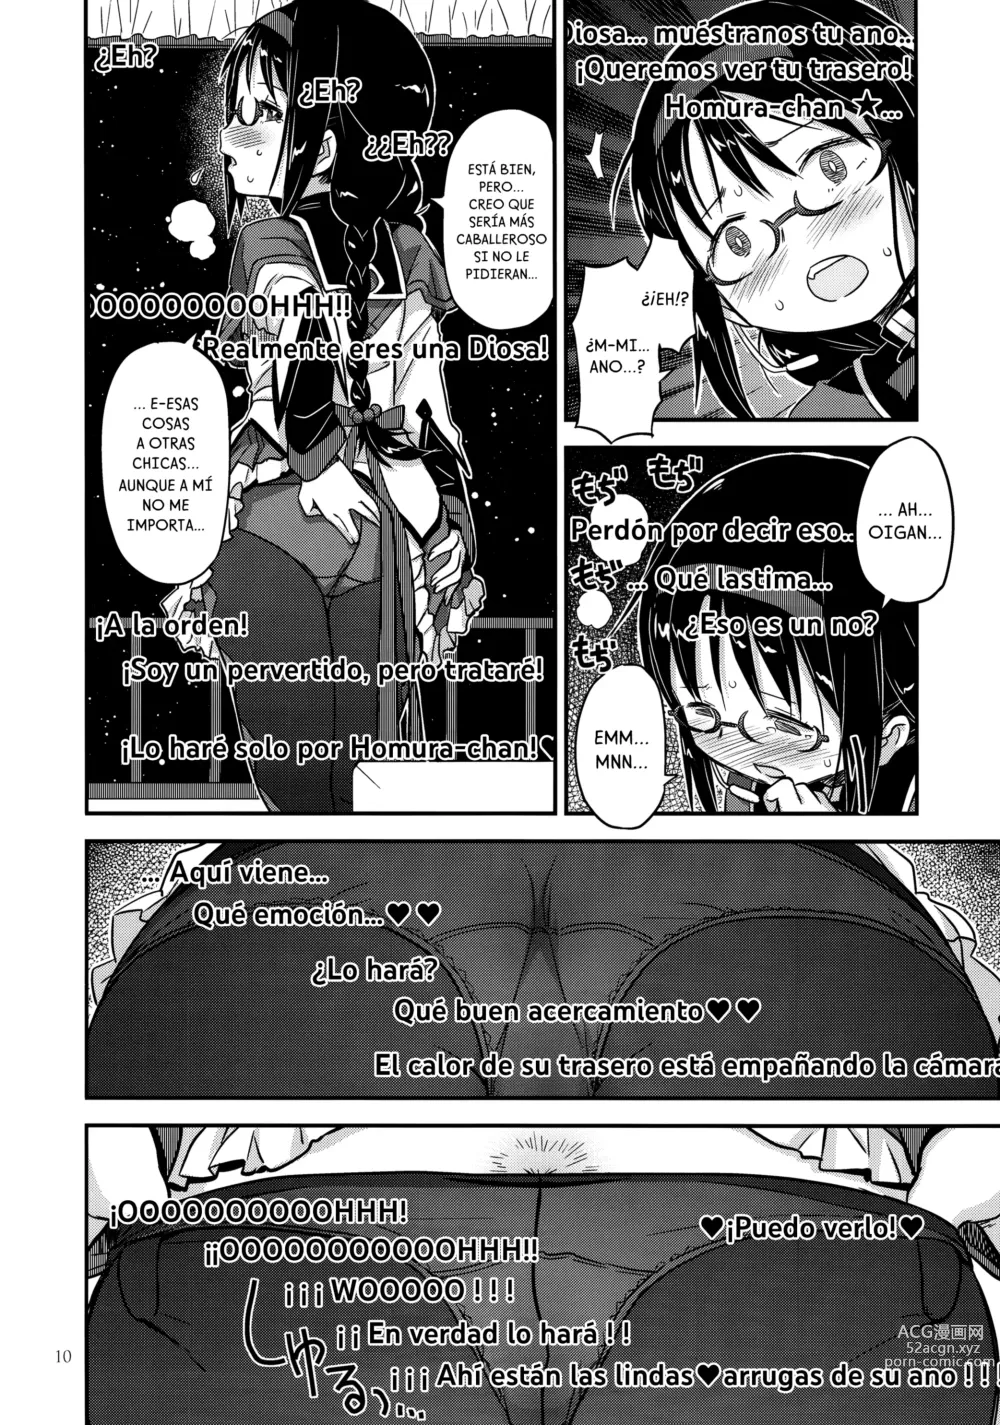 Page 9 of doujinshi GIRLIE:EX02